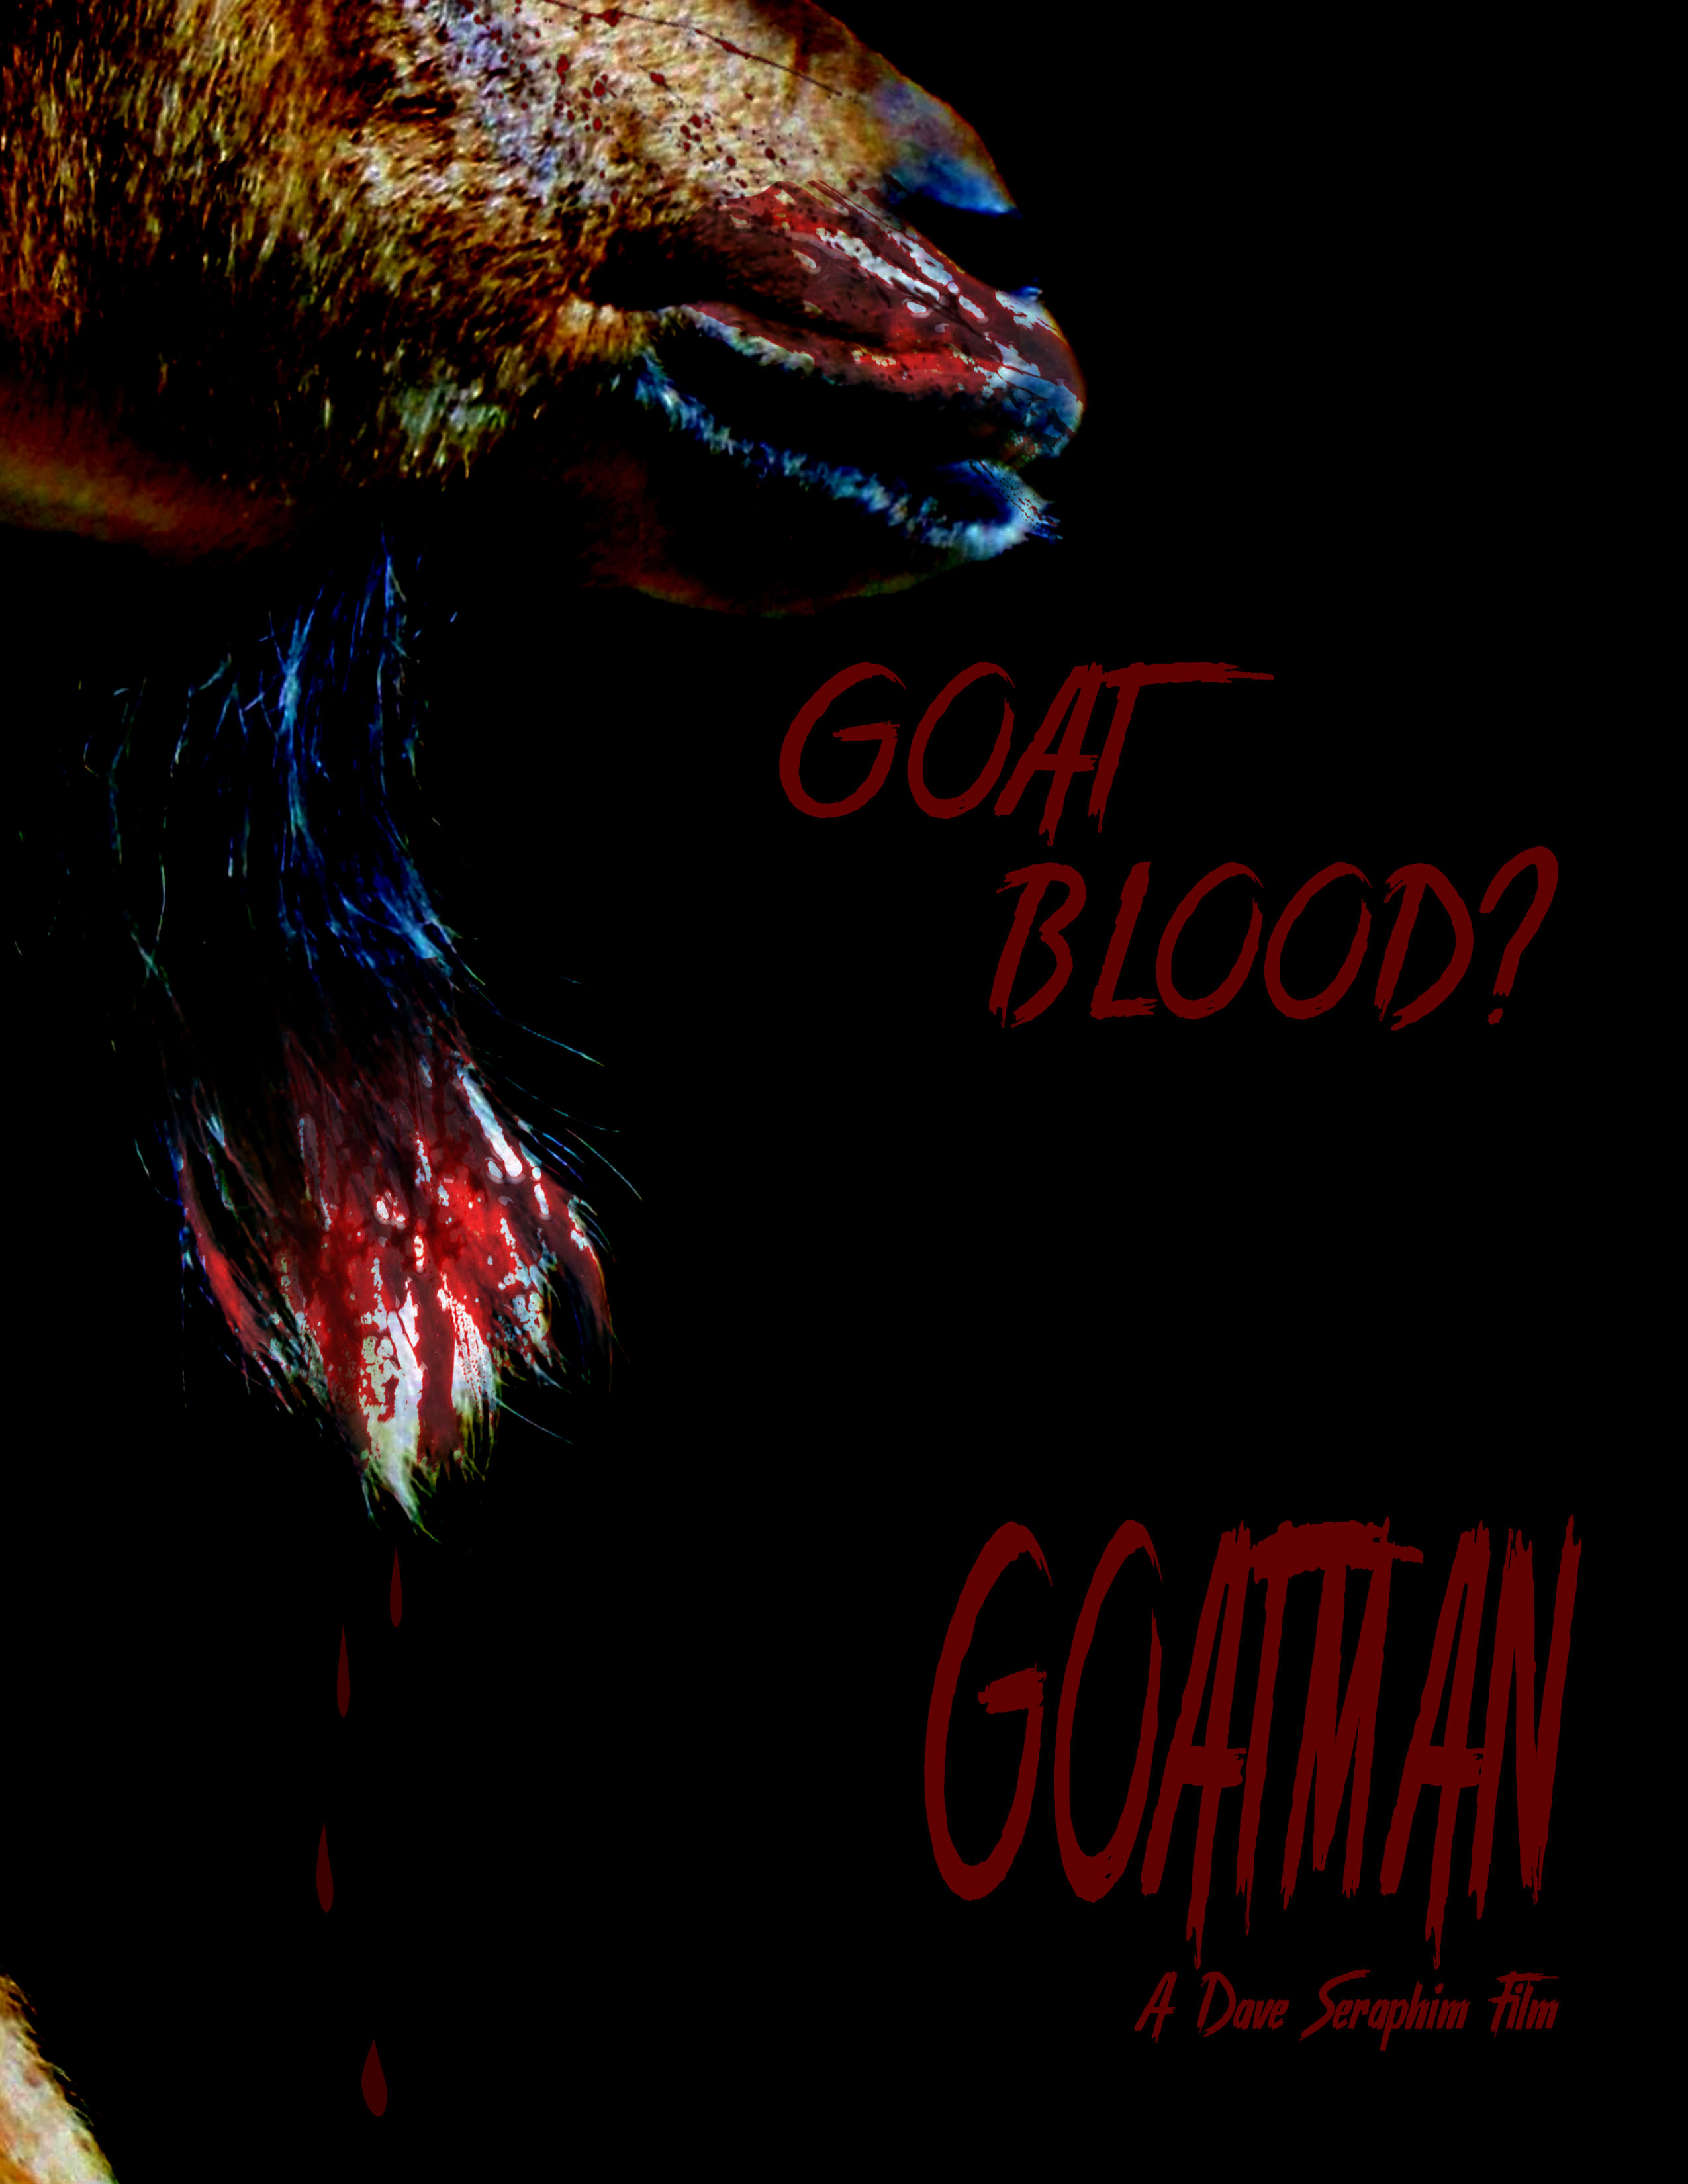 Goatman- Goat Blood?